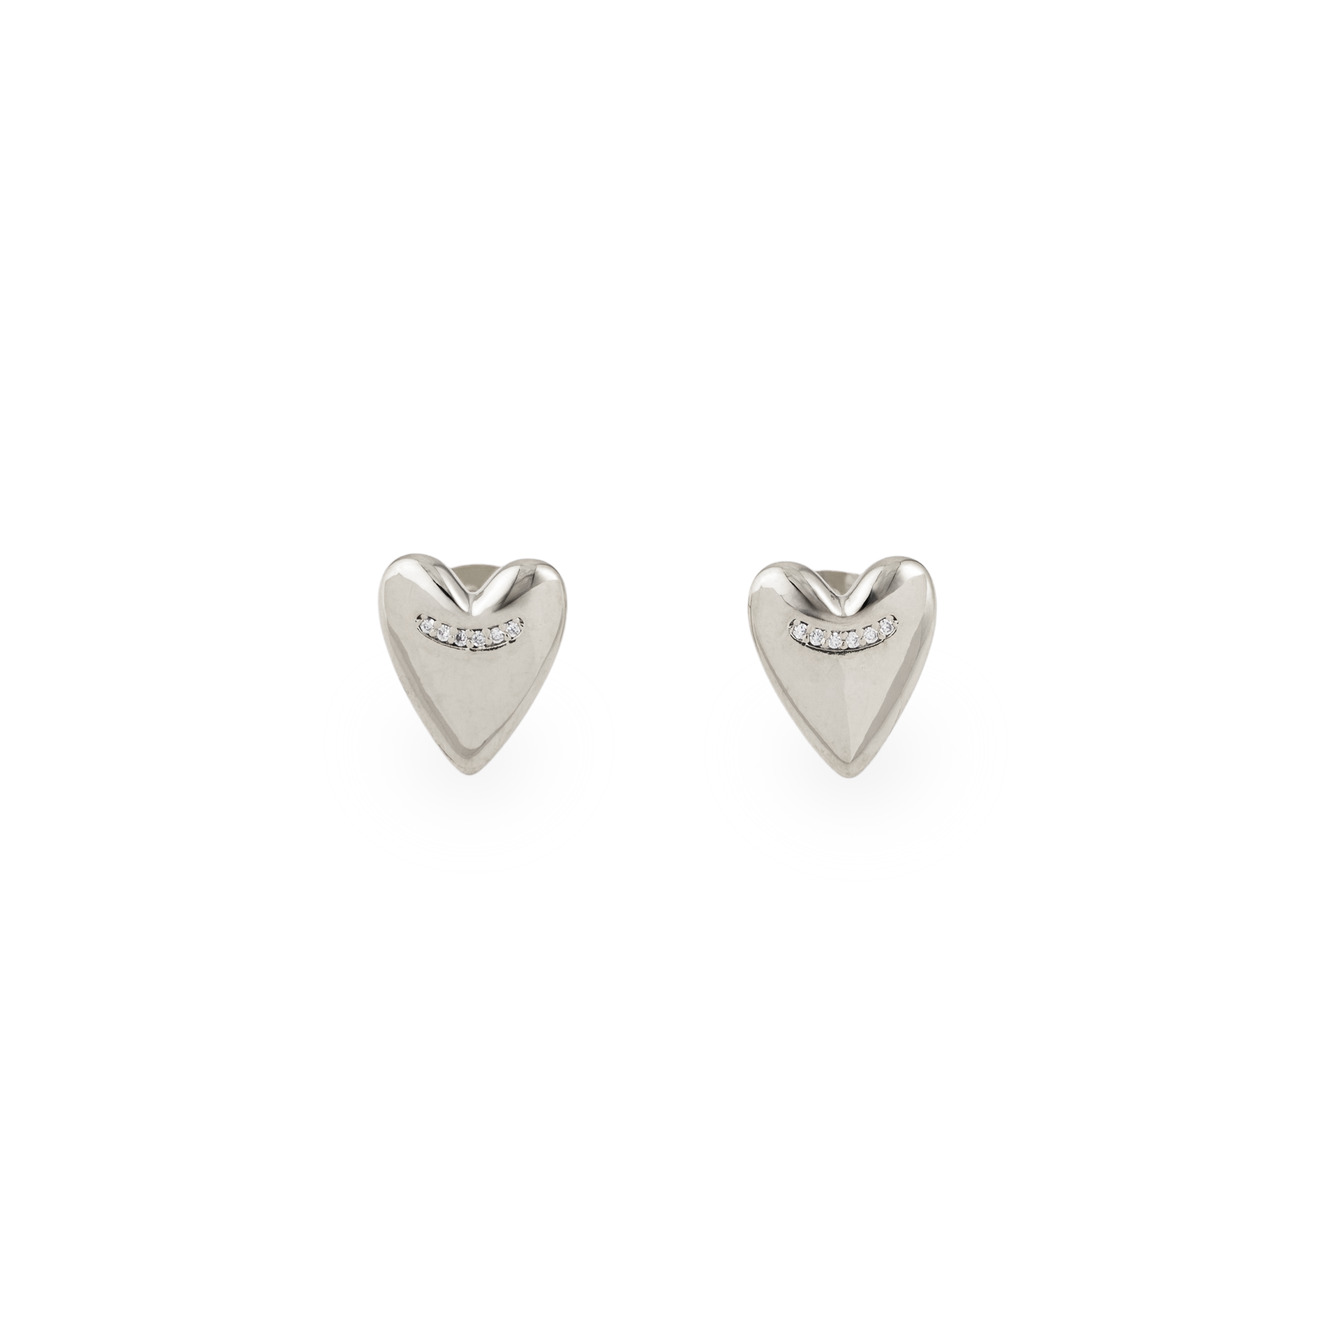 Free Form Jewelry Серебристые серьги-сердца с маленькими кристаллами lisa smith серебристые серьги в форме разбитого сердца